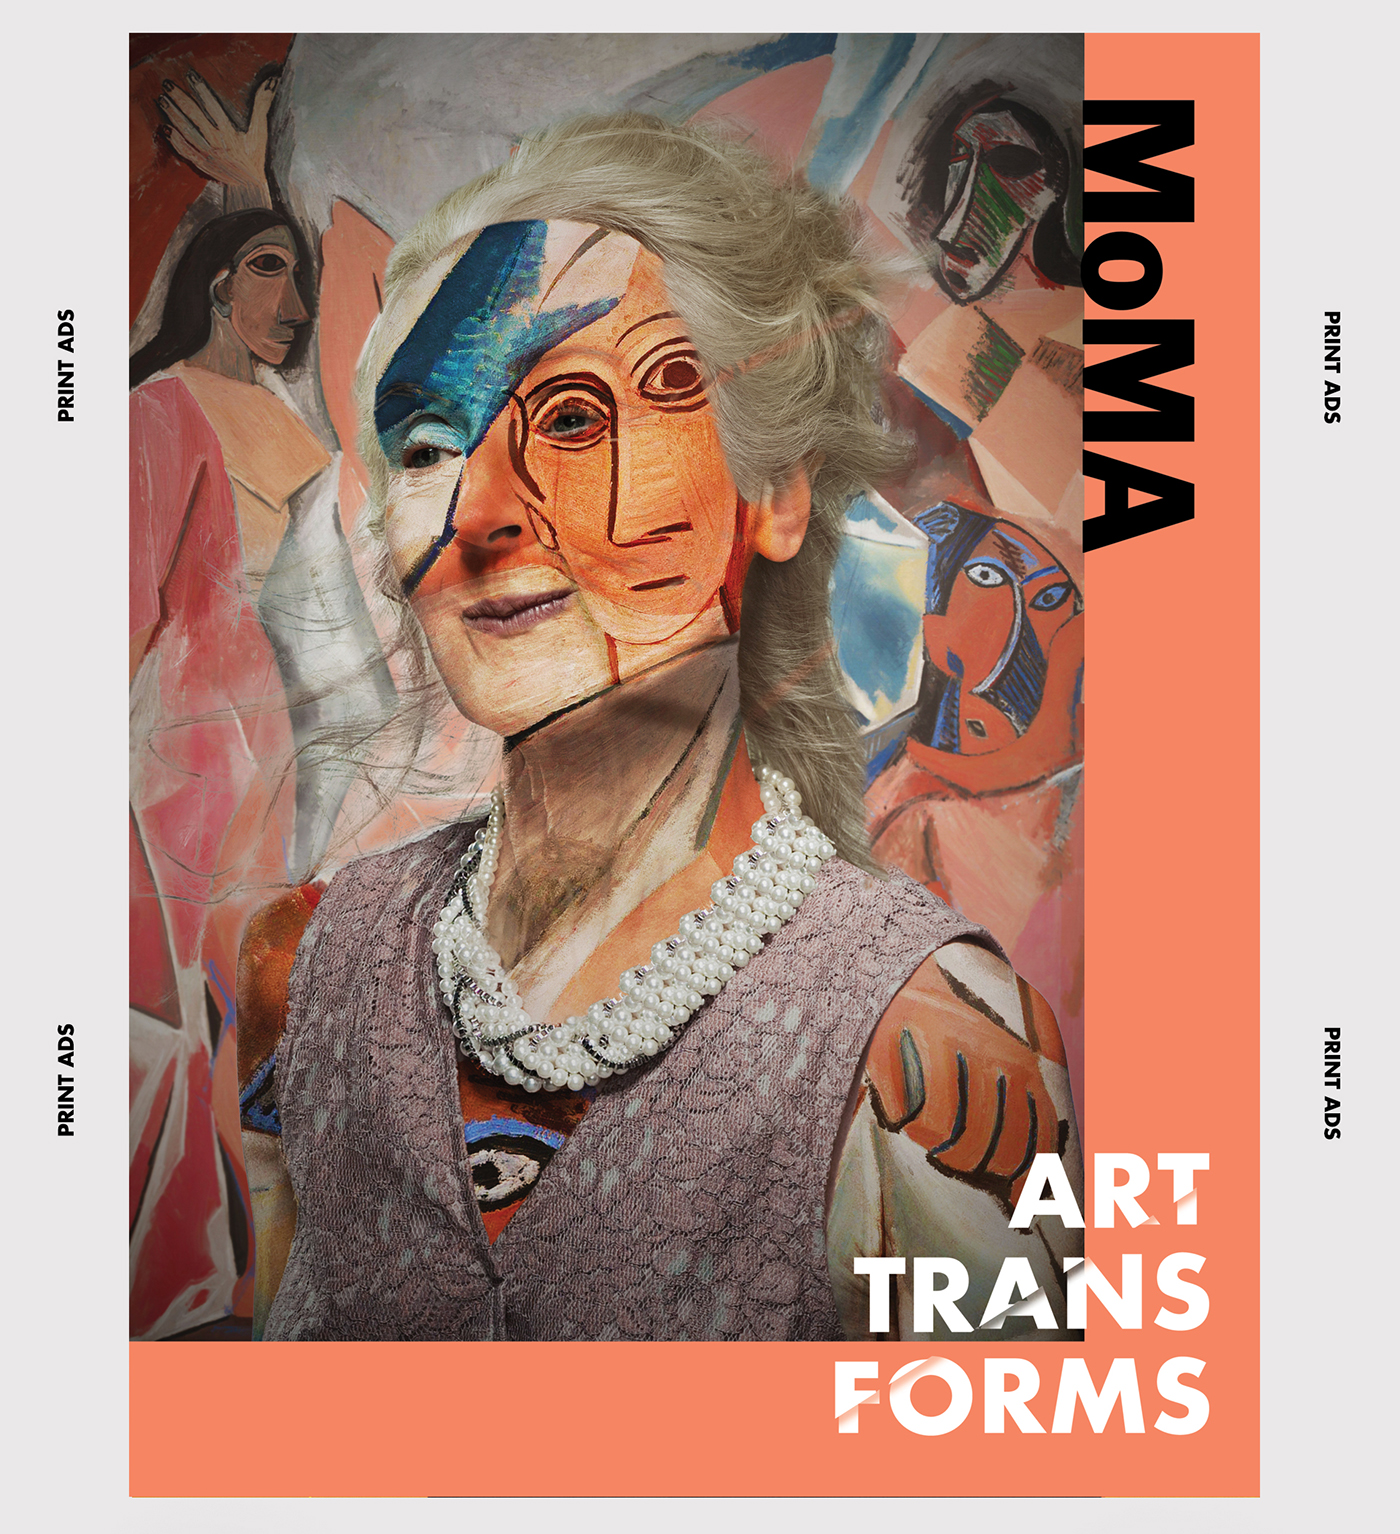 art modern moma prints posters artist Photo Manipulation  van gogh warhol Picasso